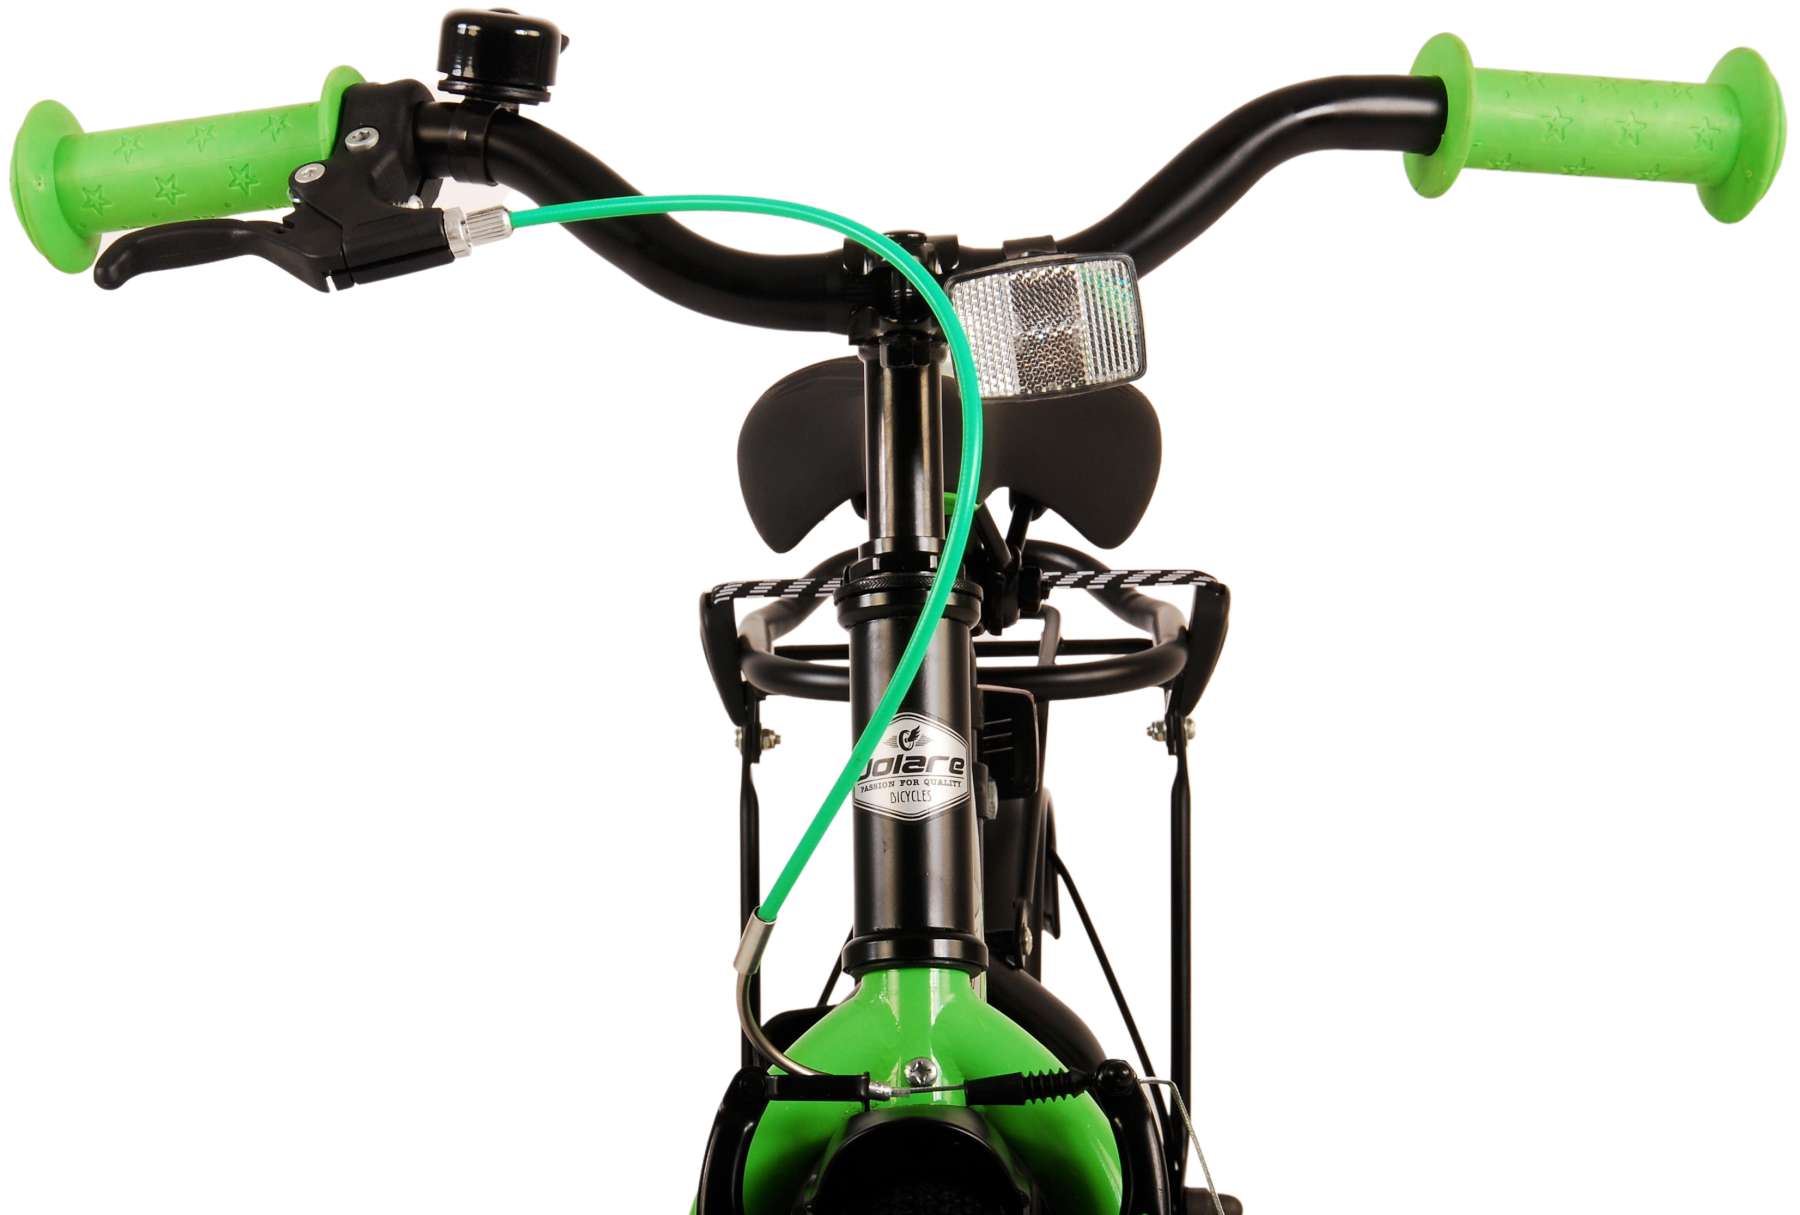 Kinderfahrrad Thombike für Jungen 12 Zoll Kinderrad in Grün Fahrrad